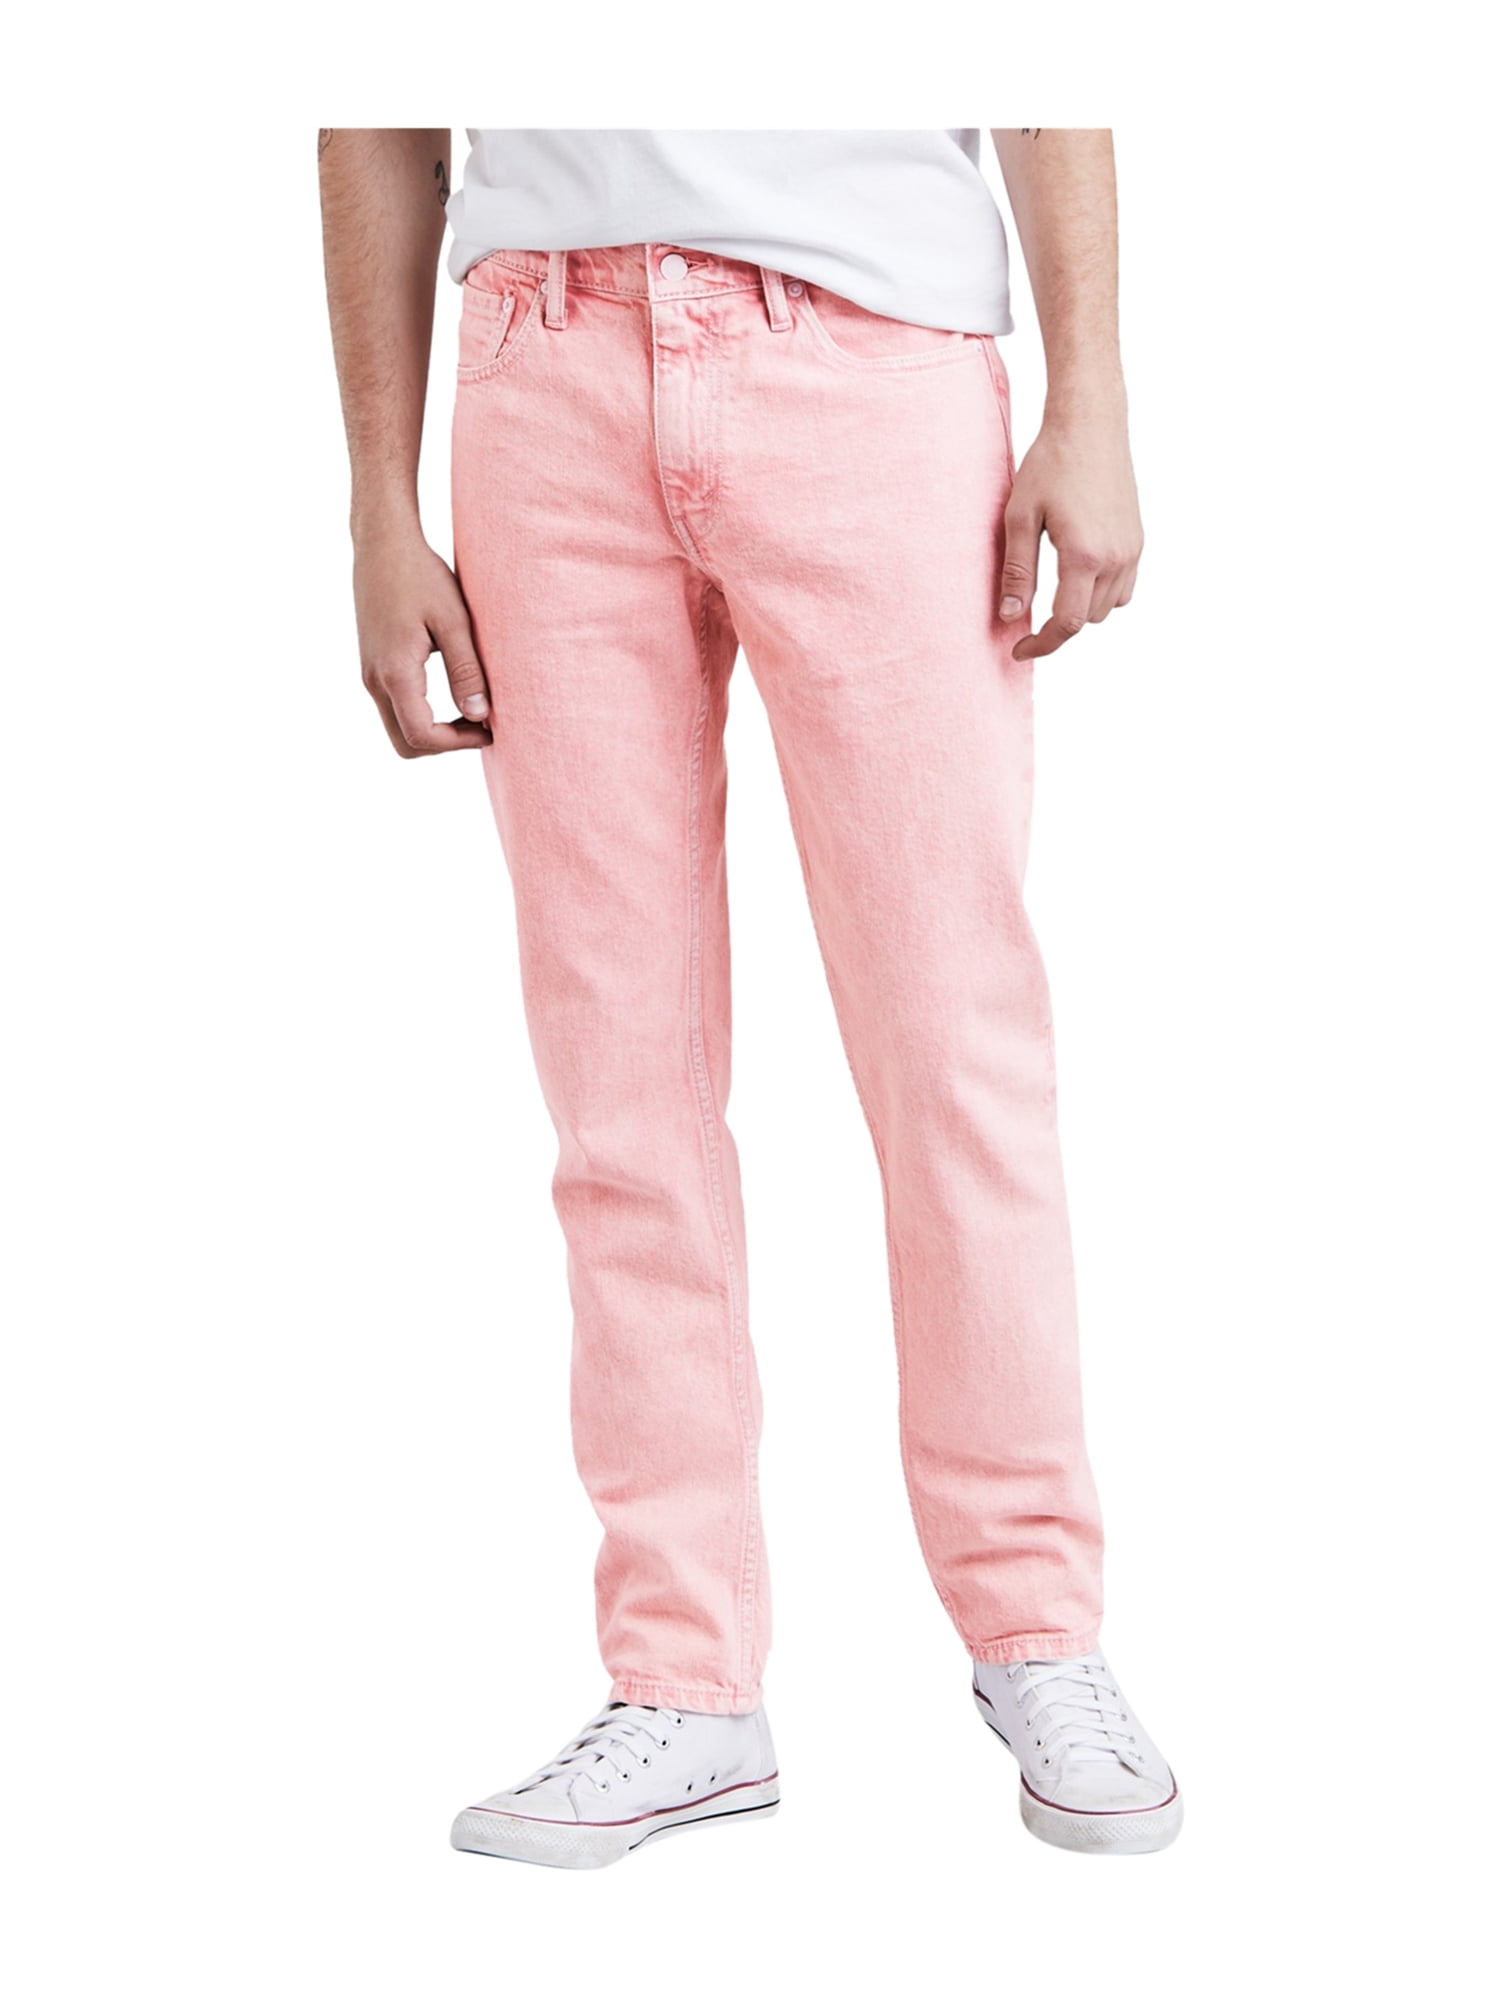 Levi's Mens 511 ZEKE Slim Fit Jeans paspink 34x30 | Walmart Canada